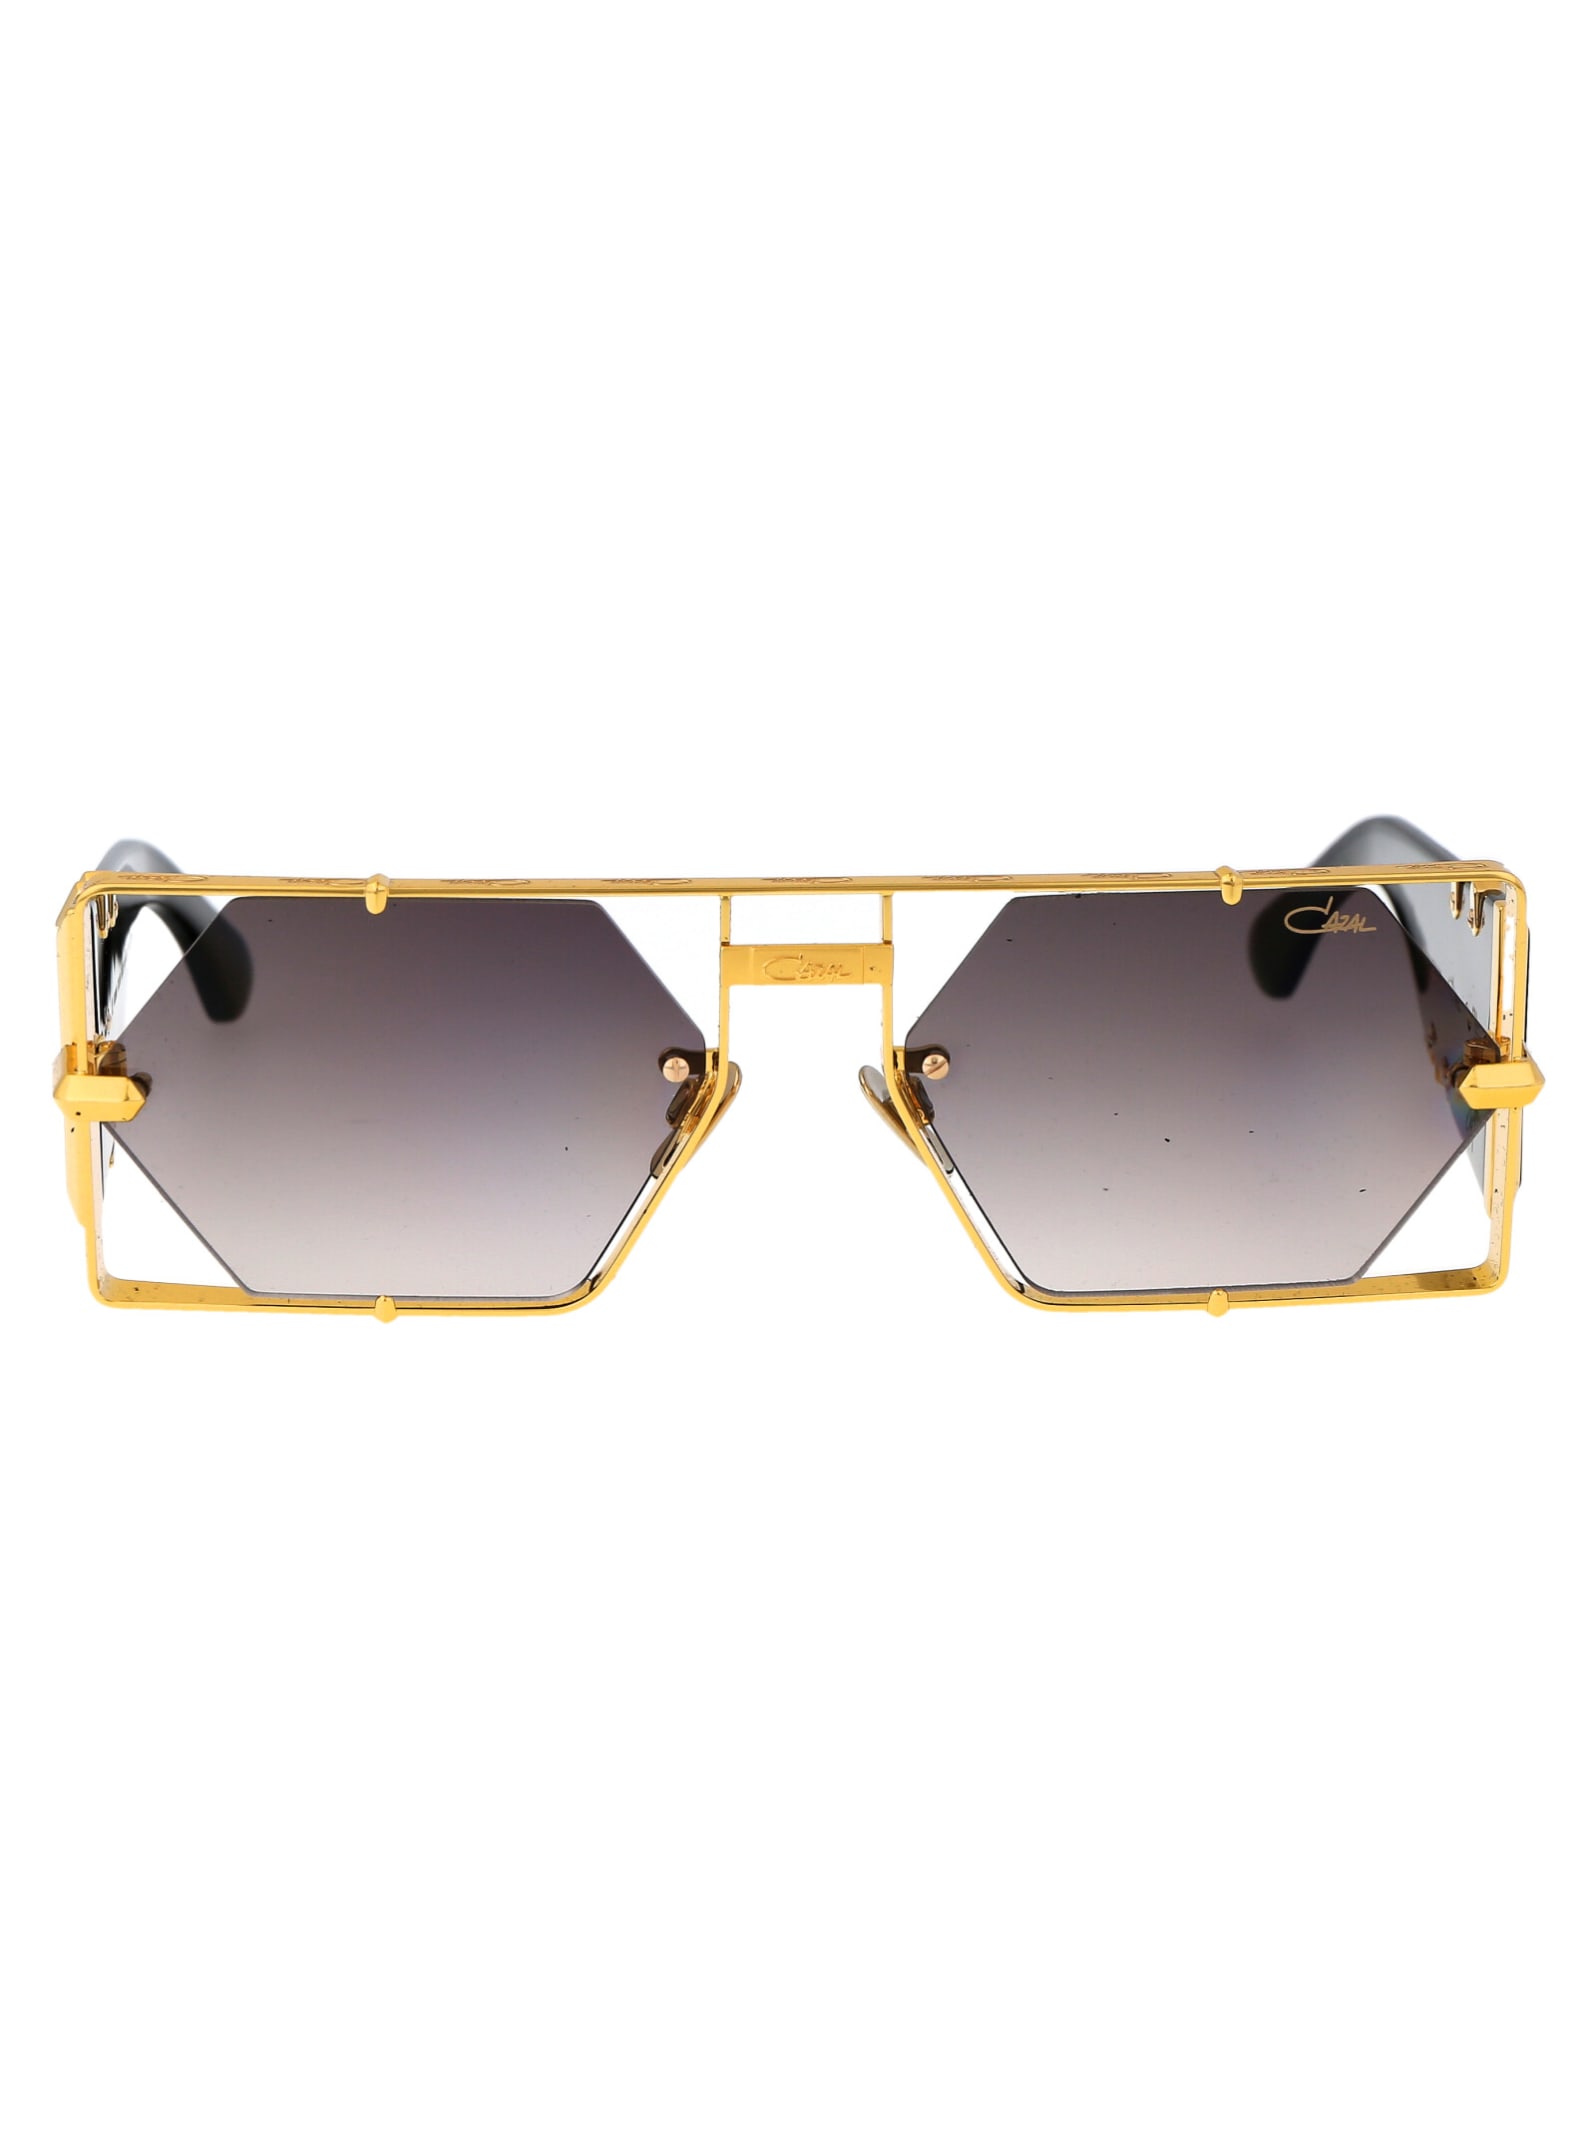 Cazal Mod. 004 Sunglasses In 001 Gold Black